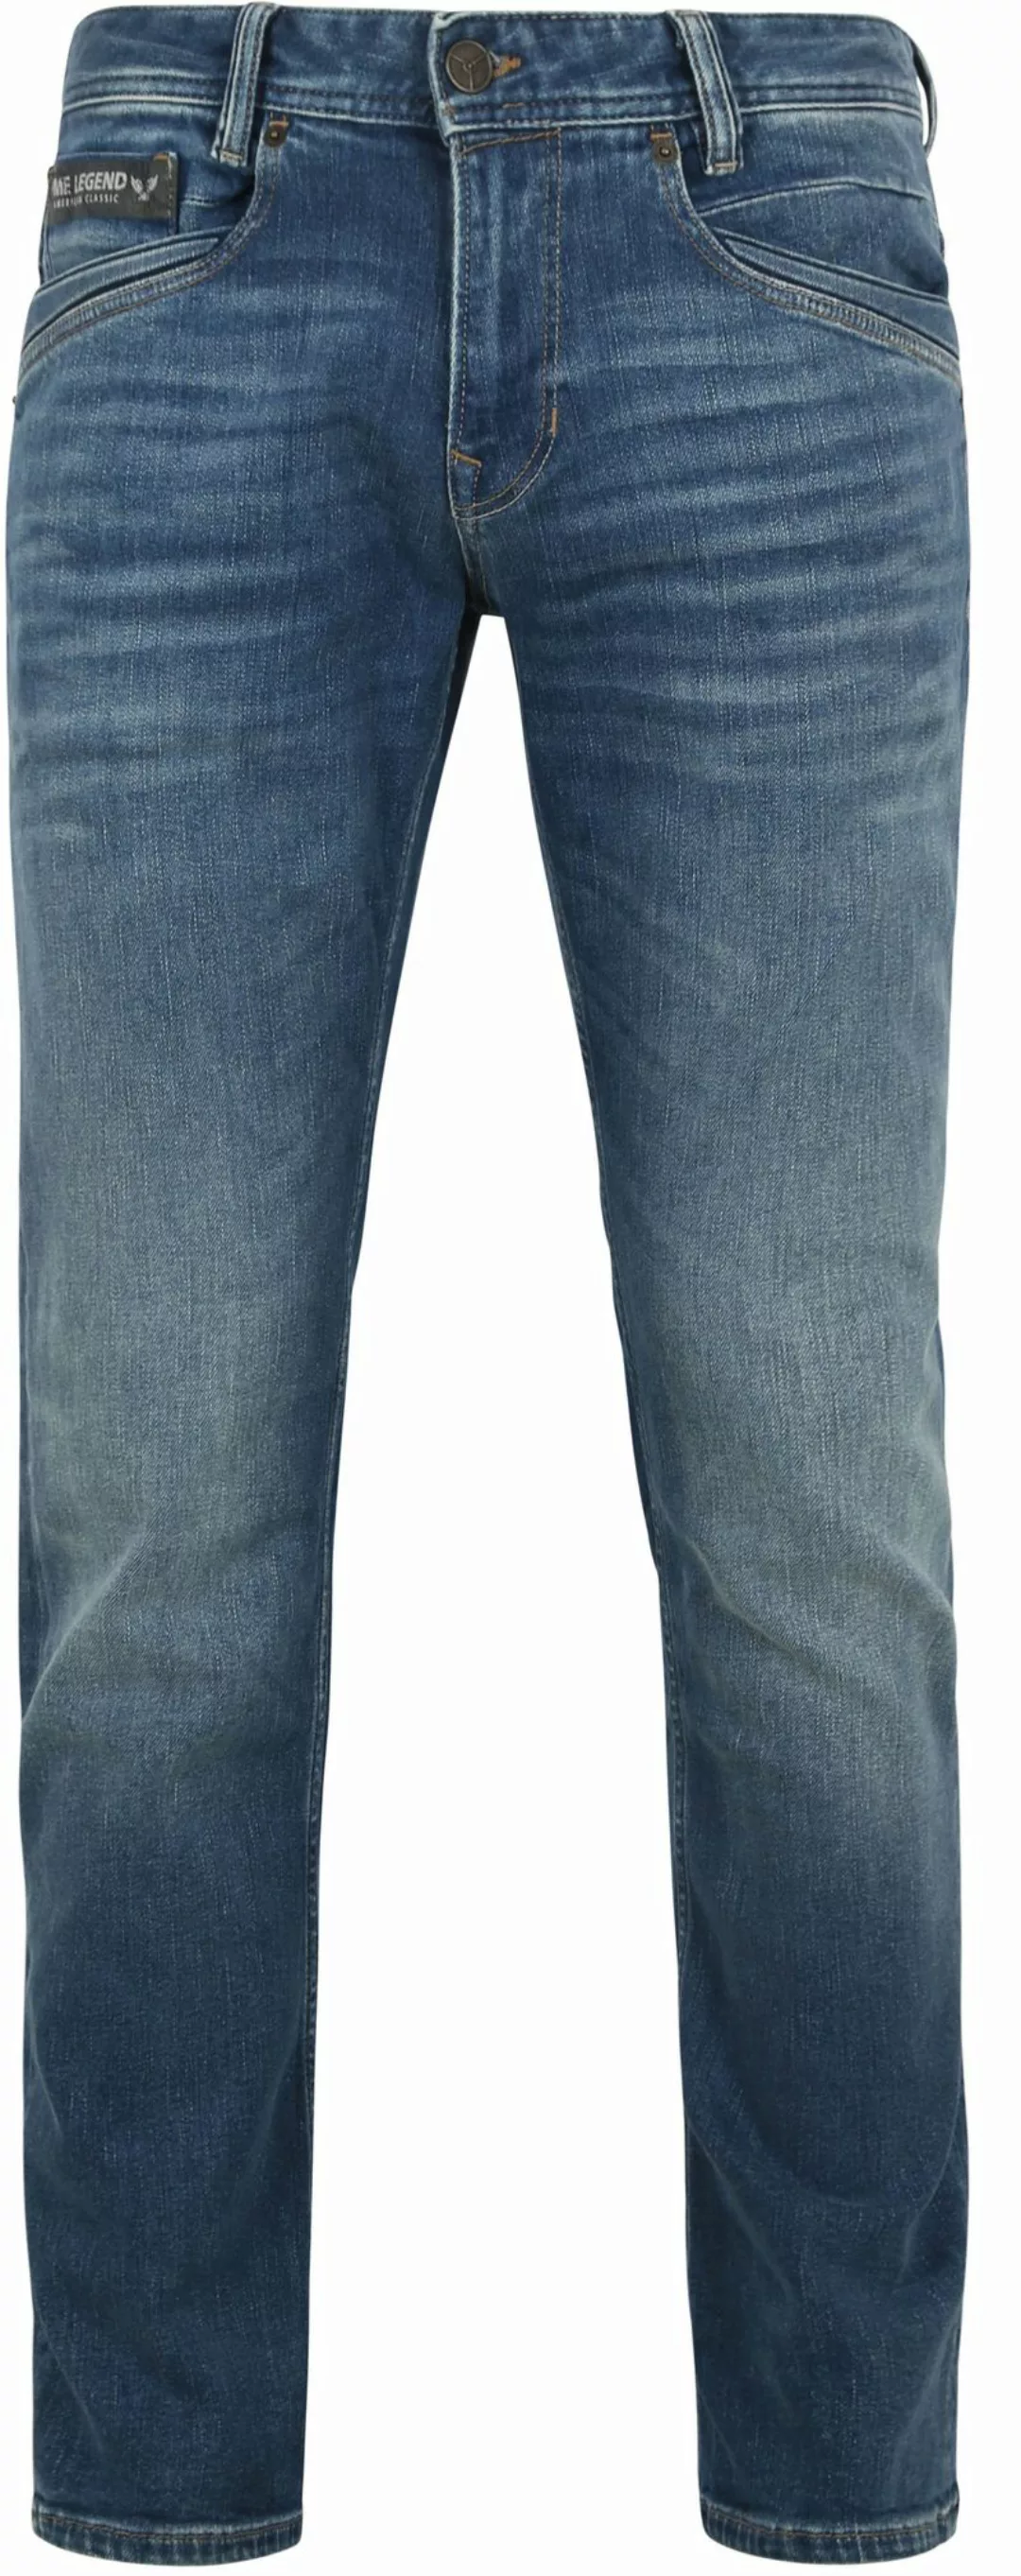 PME Legend Skyrak Jeans Blau HMB - Größe W 35 - L 34 günstig online kaufen